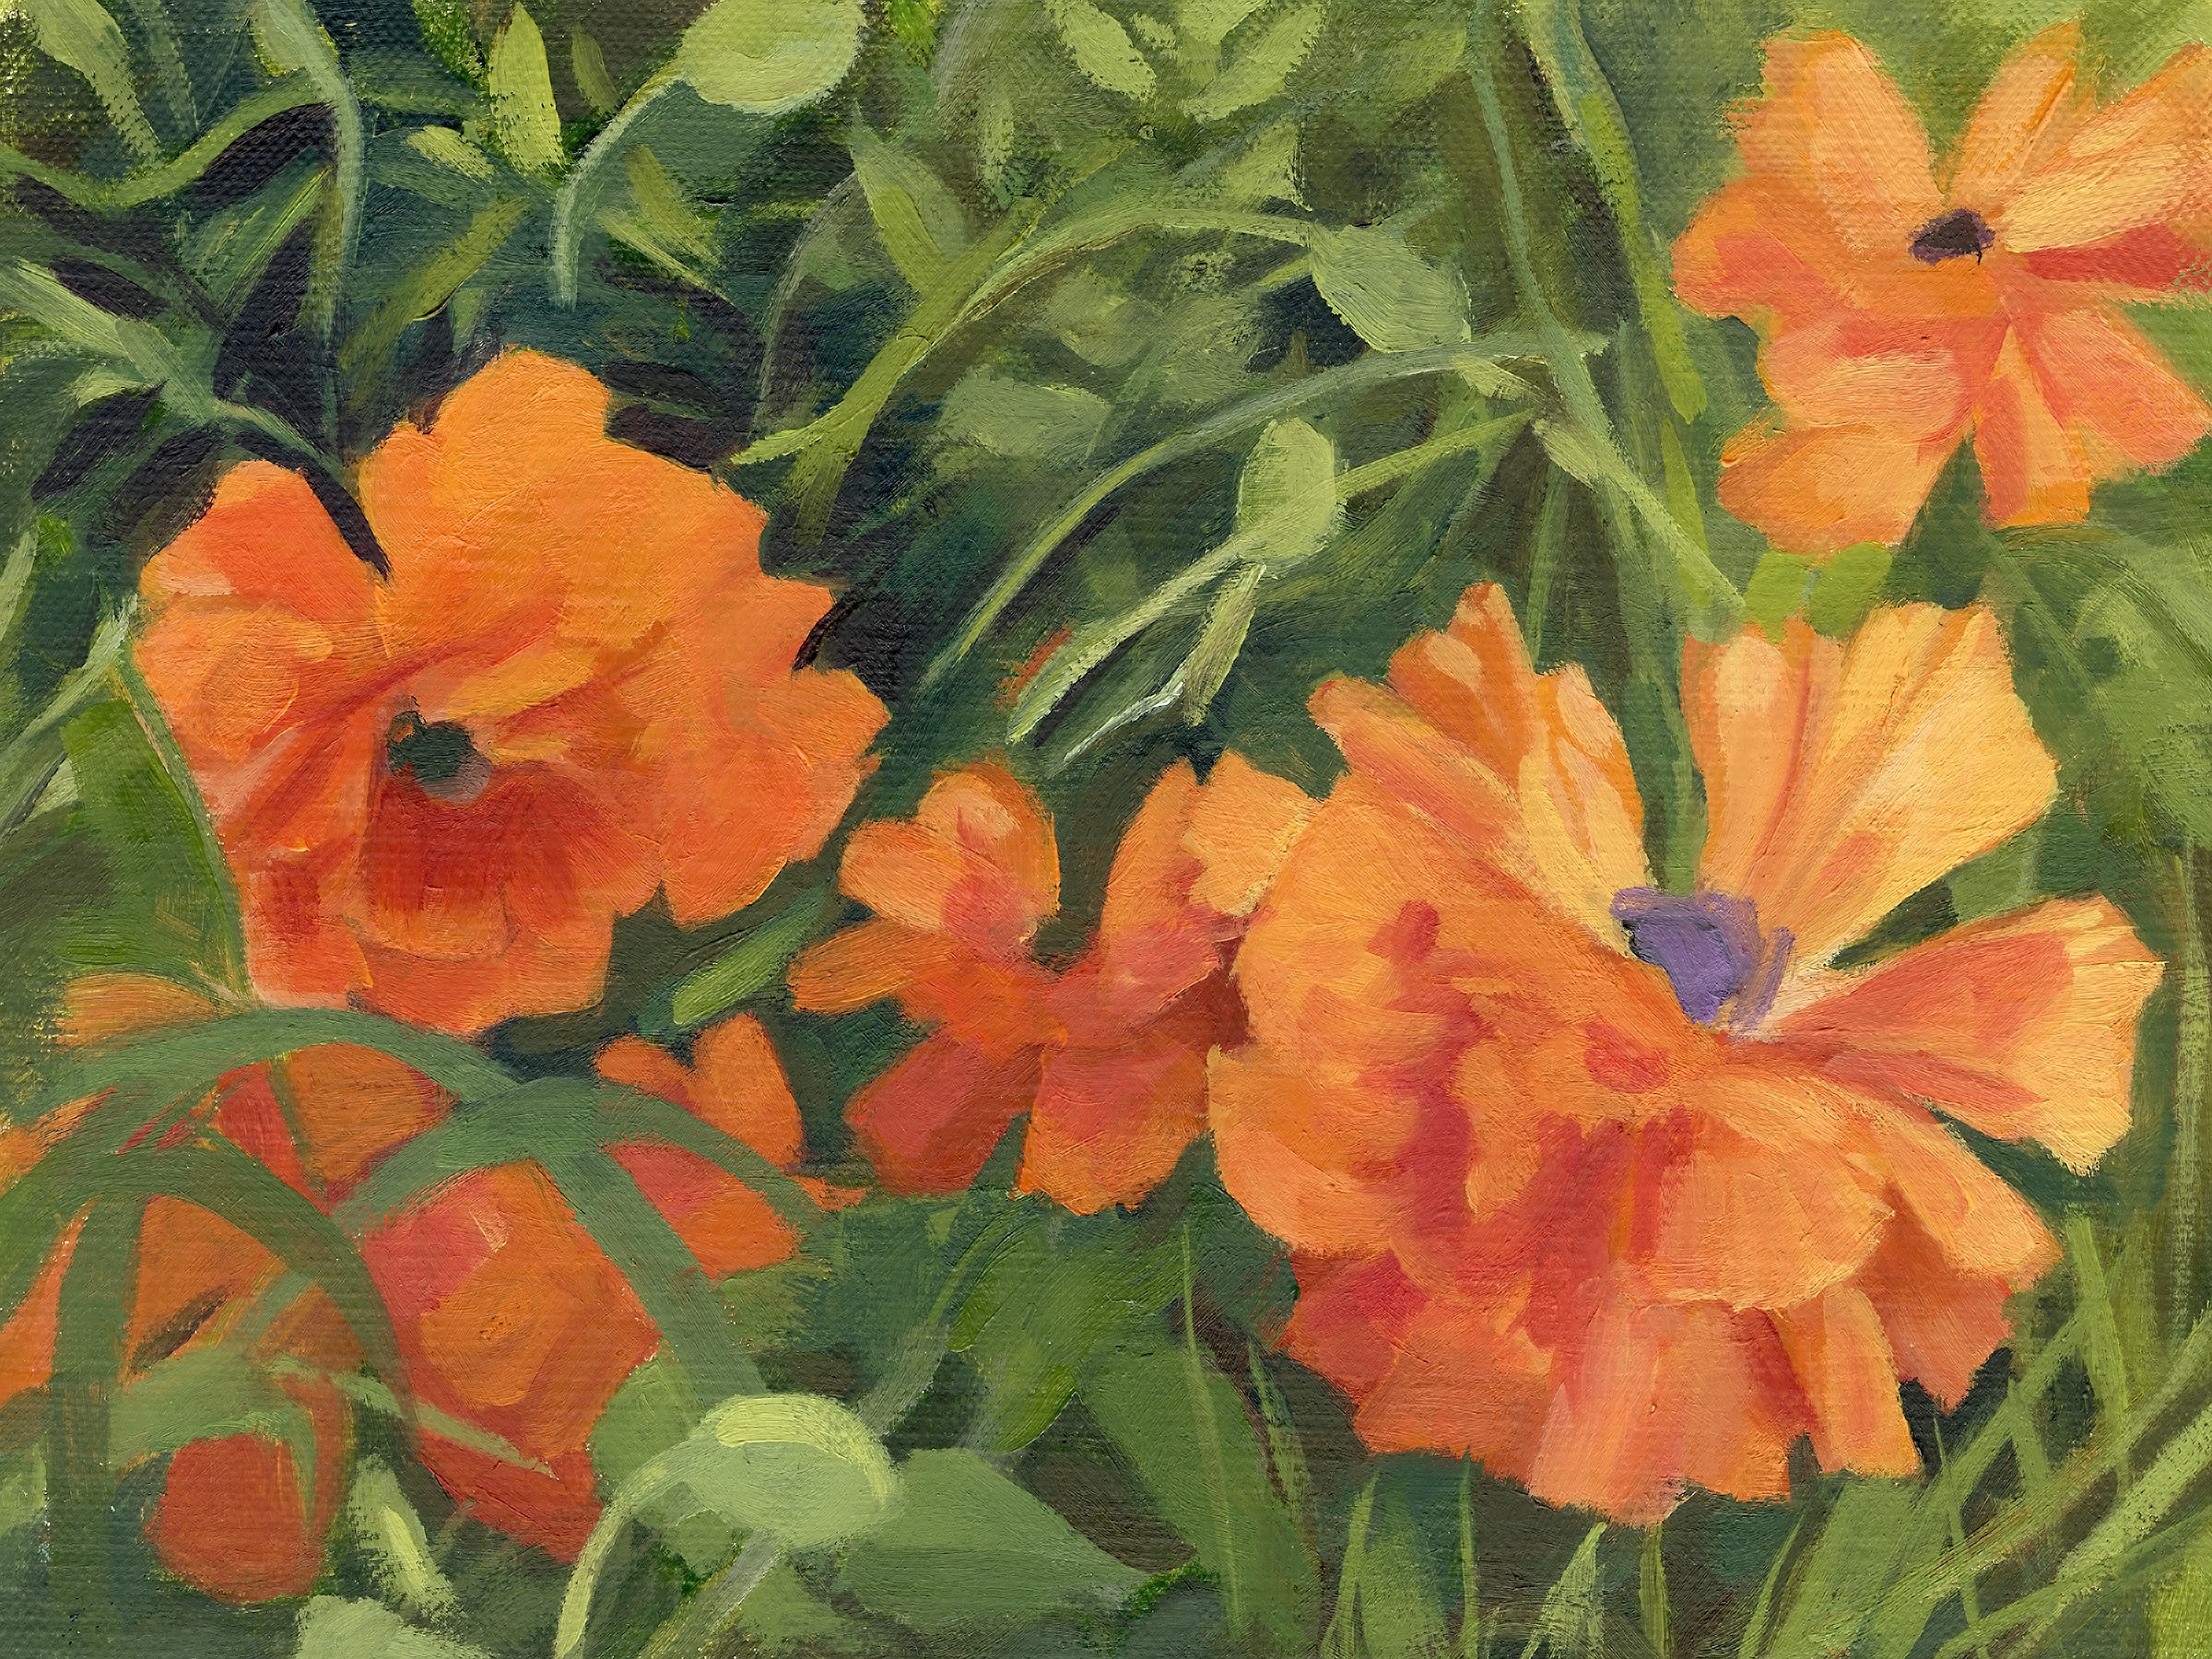 Field poppies. 8x6 oil painting on linen board. 2019